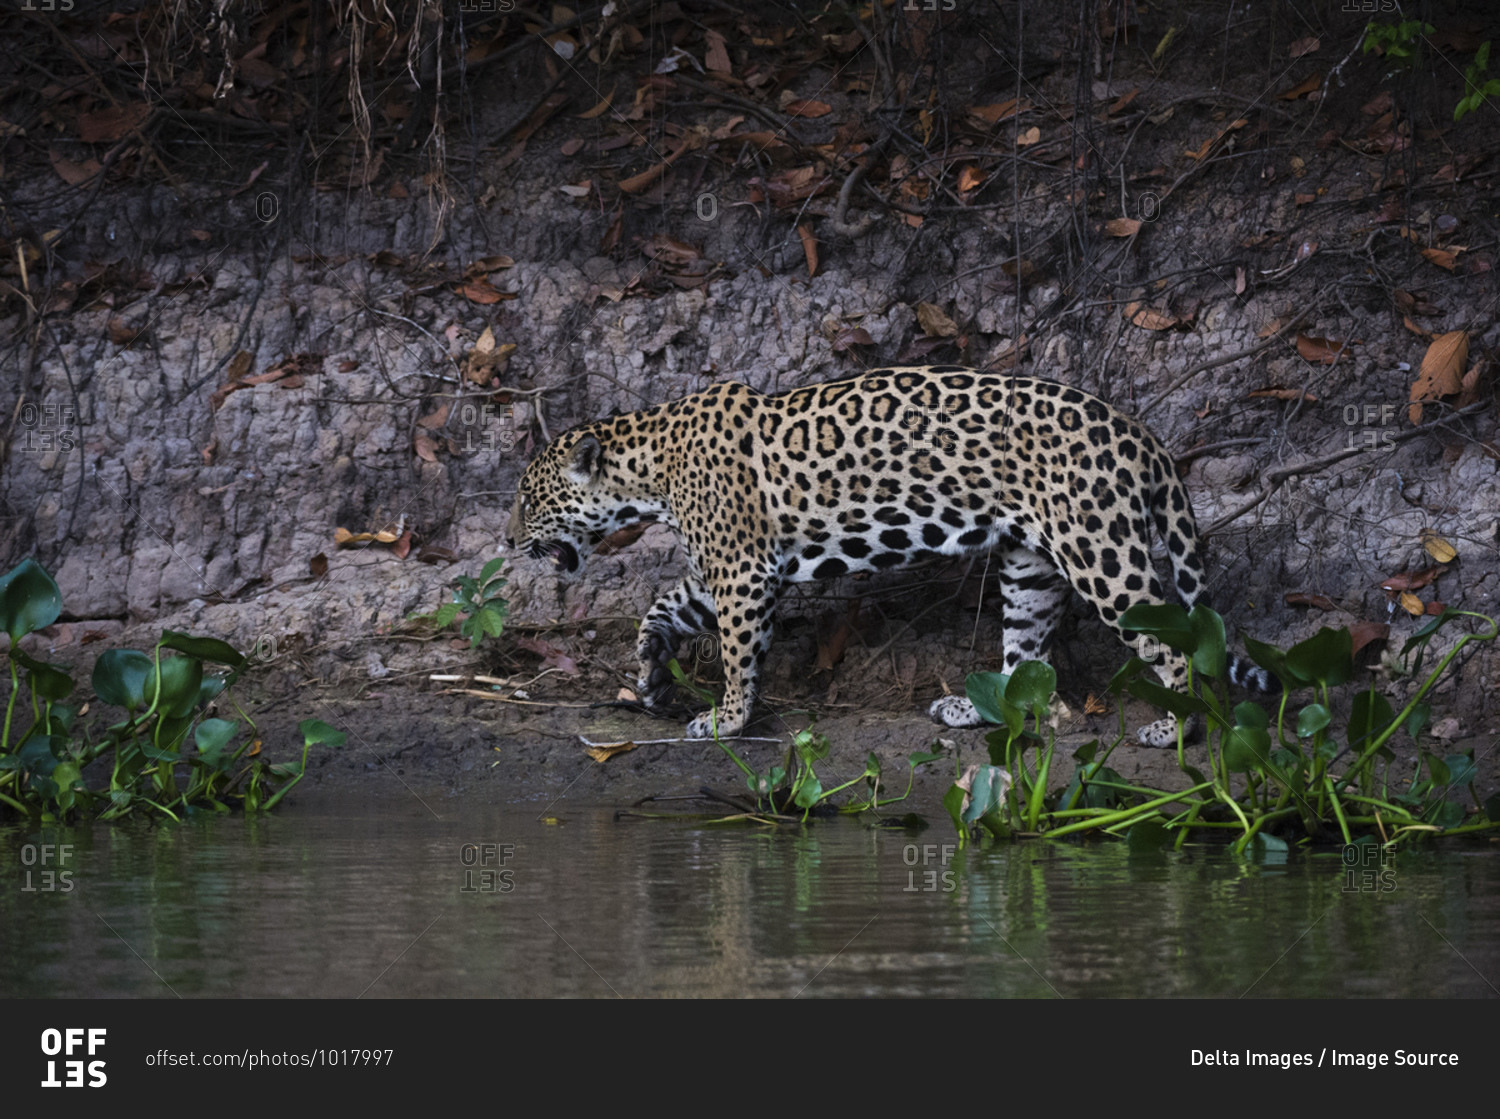 Jaguar (Panthera onca) walking on river bank, Pantanal, Mato Grosso, Brazil